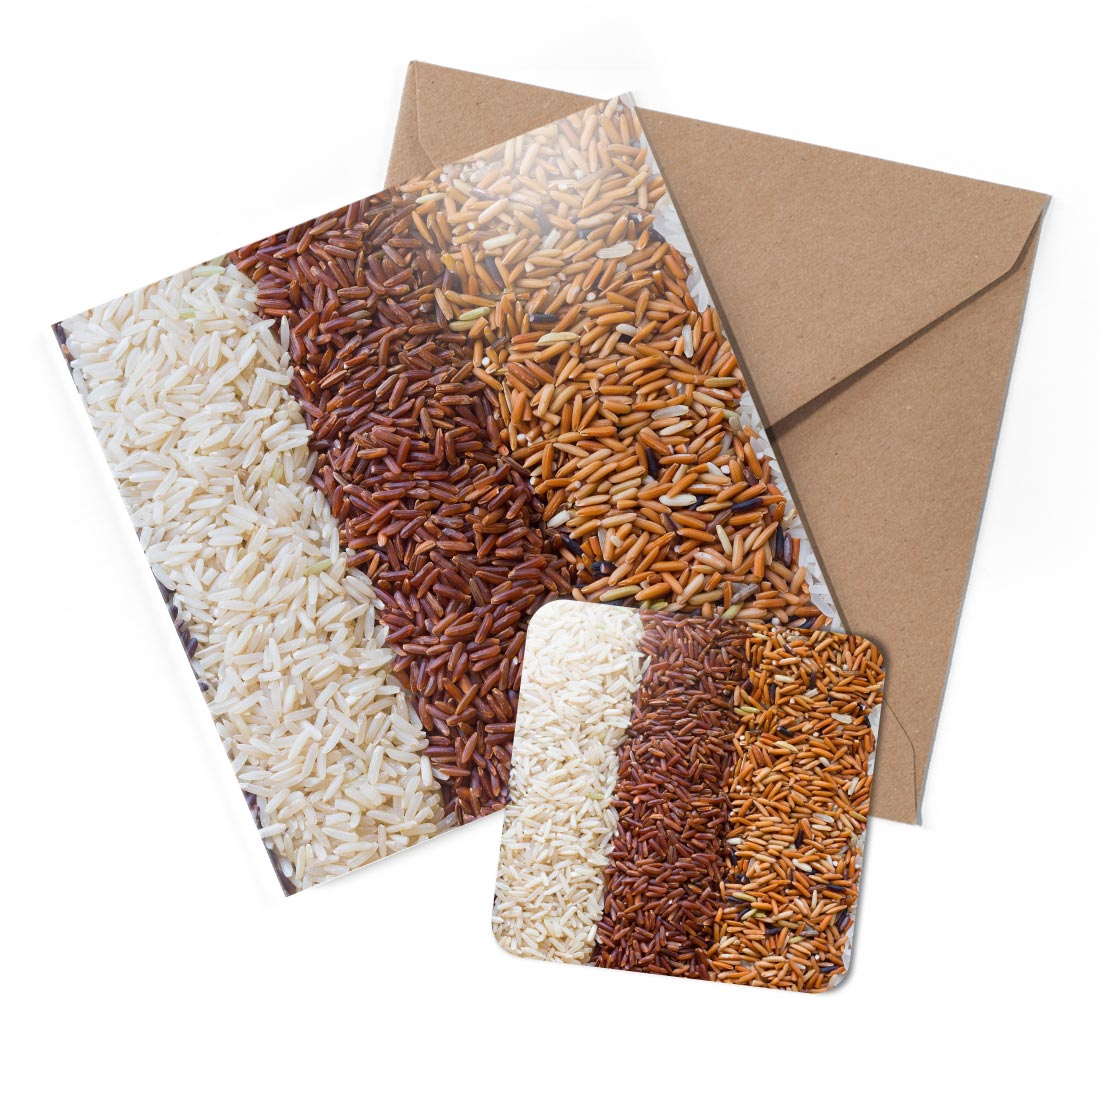 1 x Greeting Card & Coaster Set - Organic Mixed Rice #51620